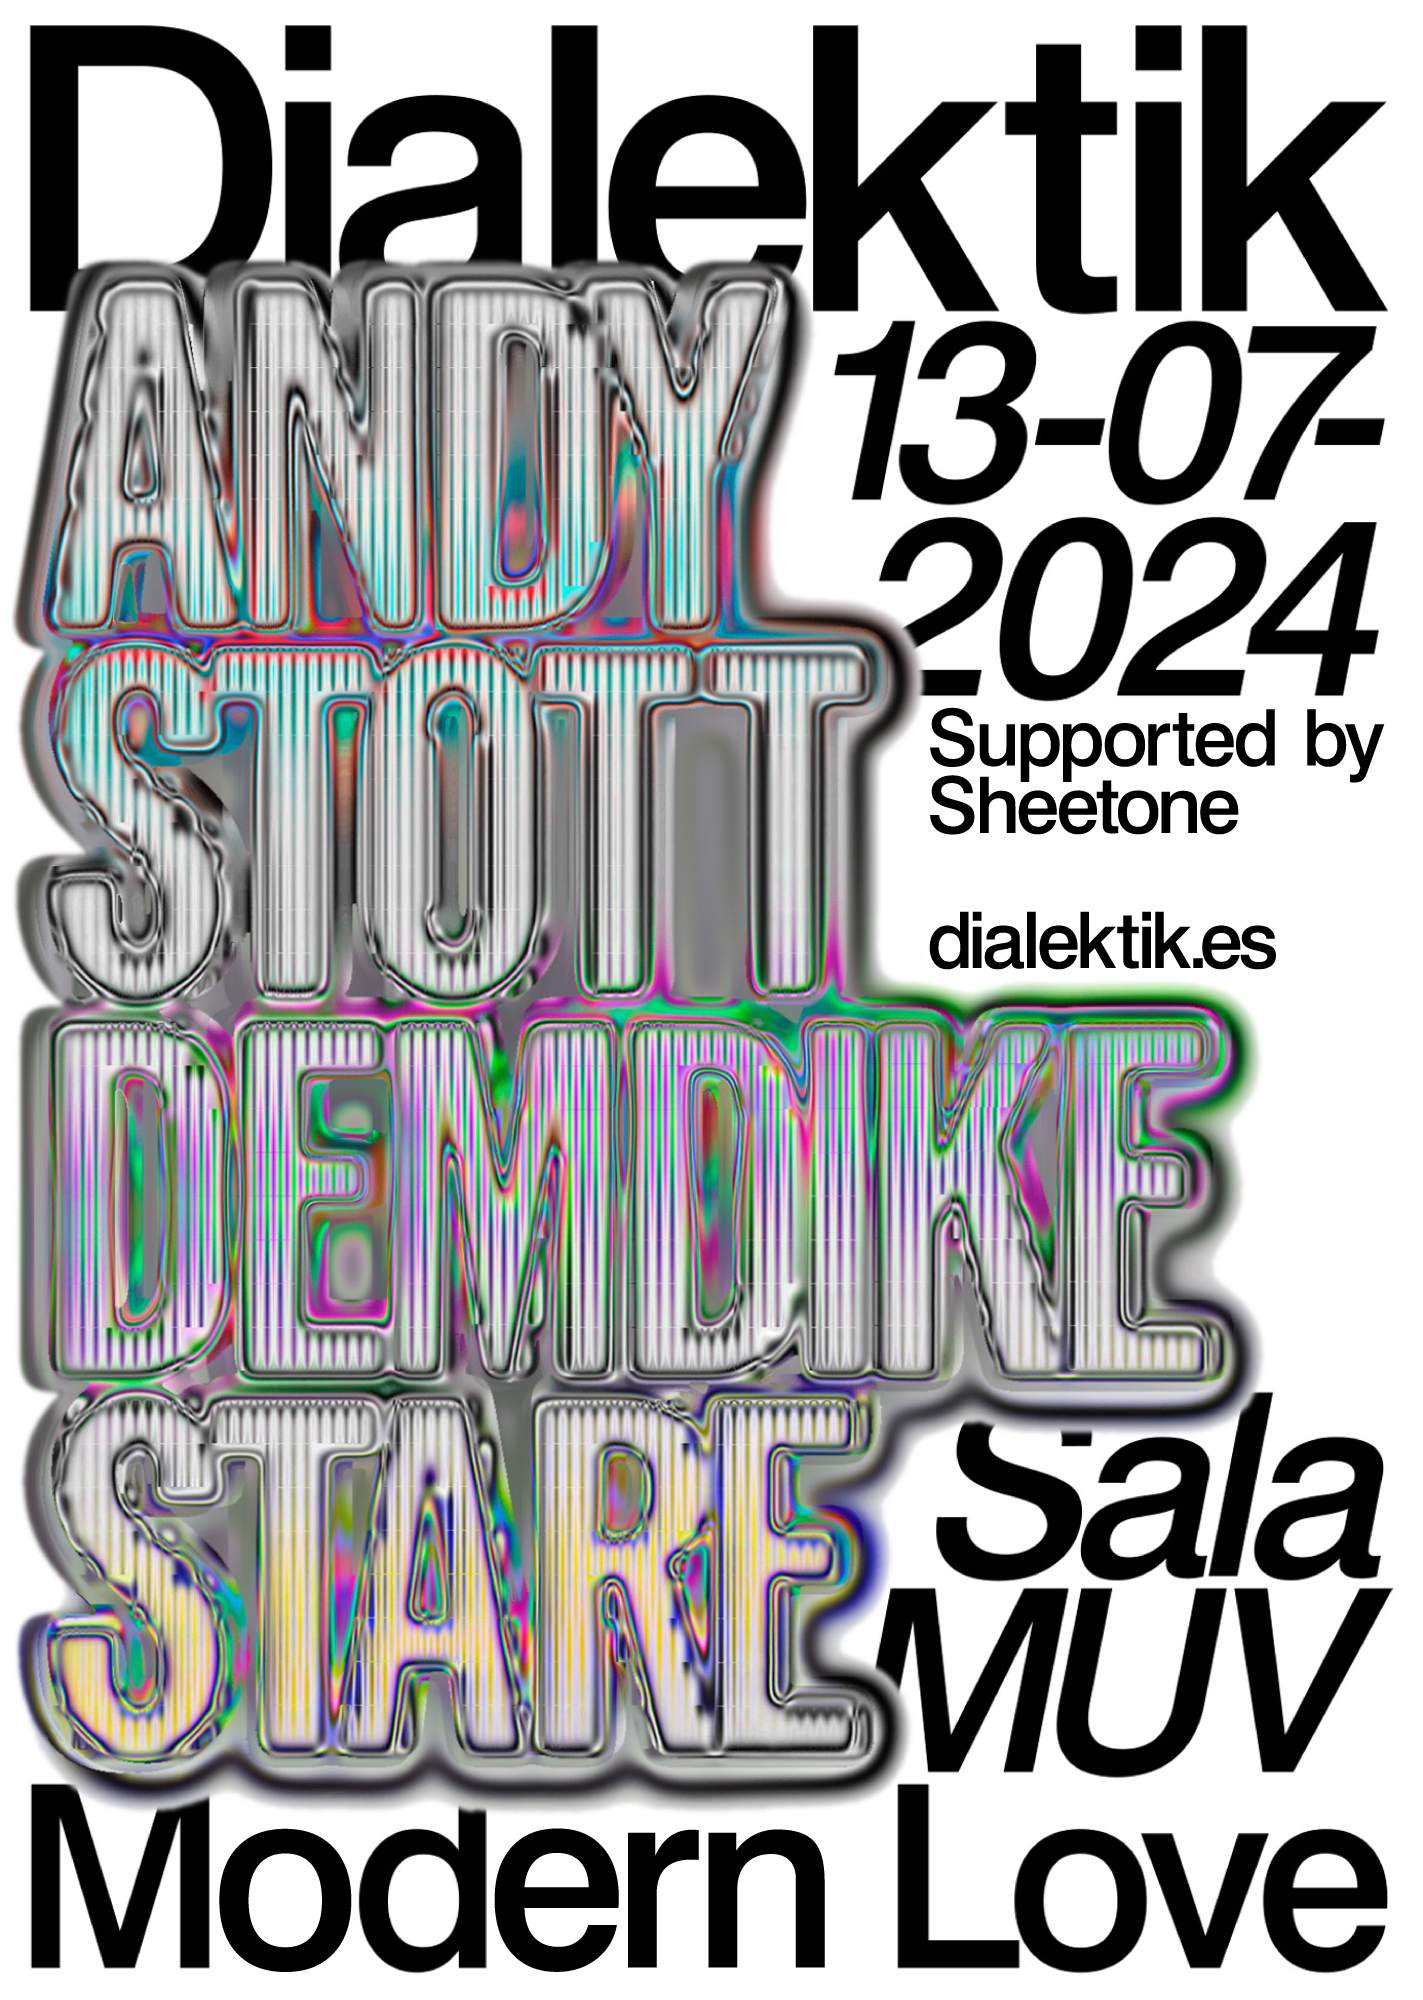 Dialektik: Andy Stott (live), Demdike Stare (extended set) - Página frontal